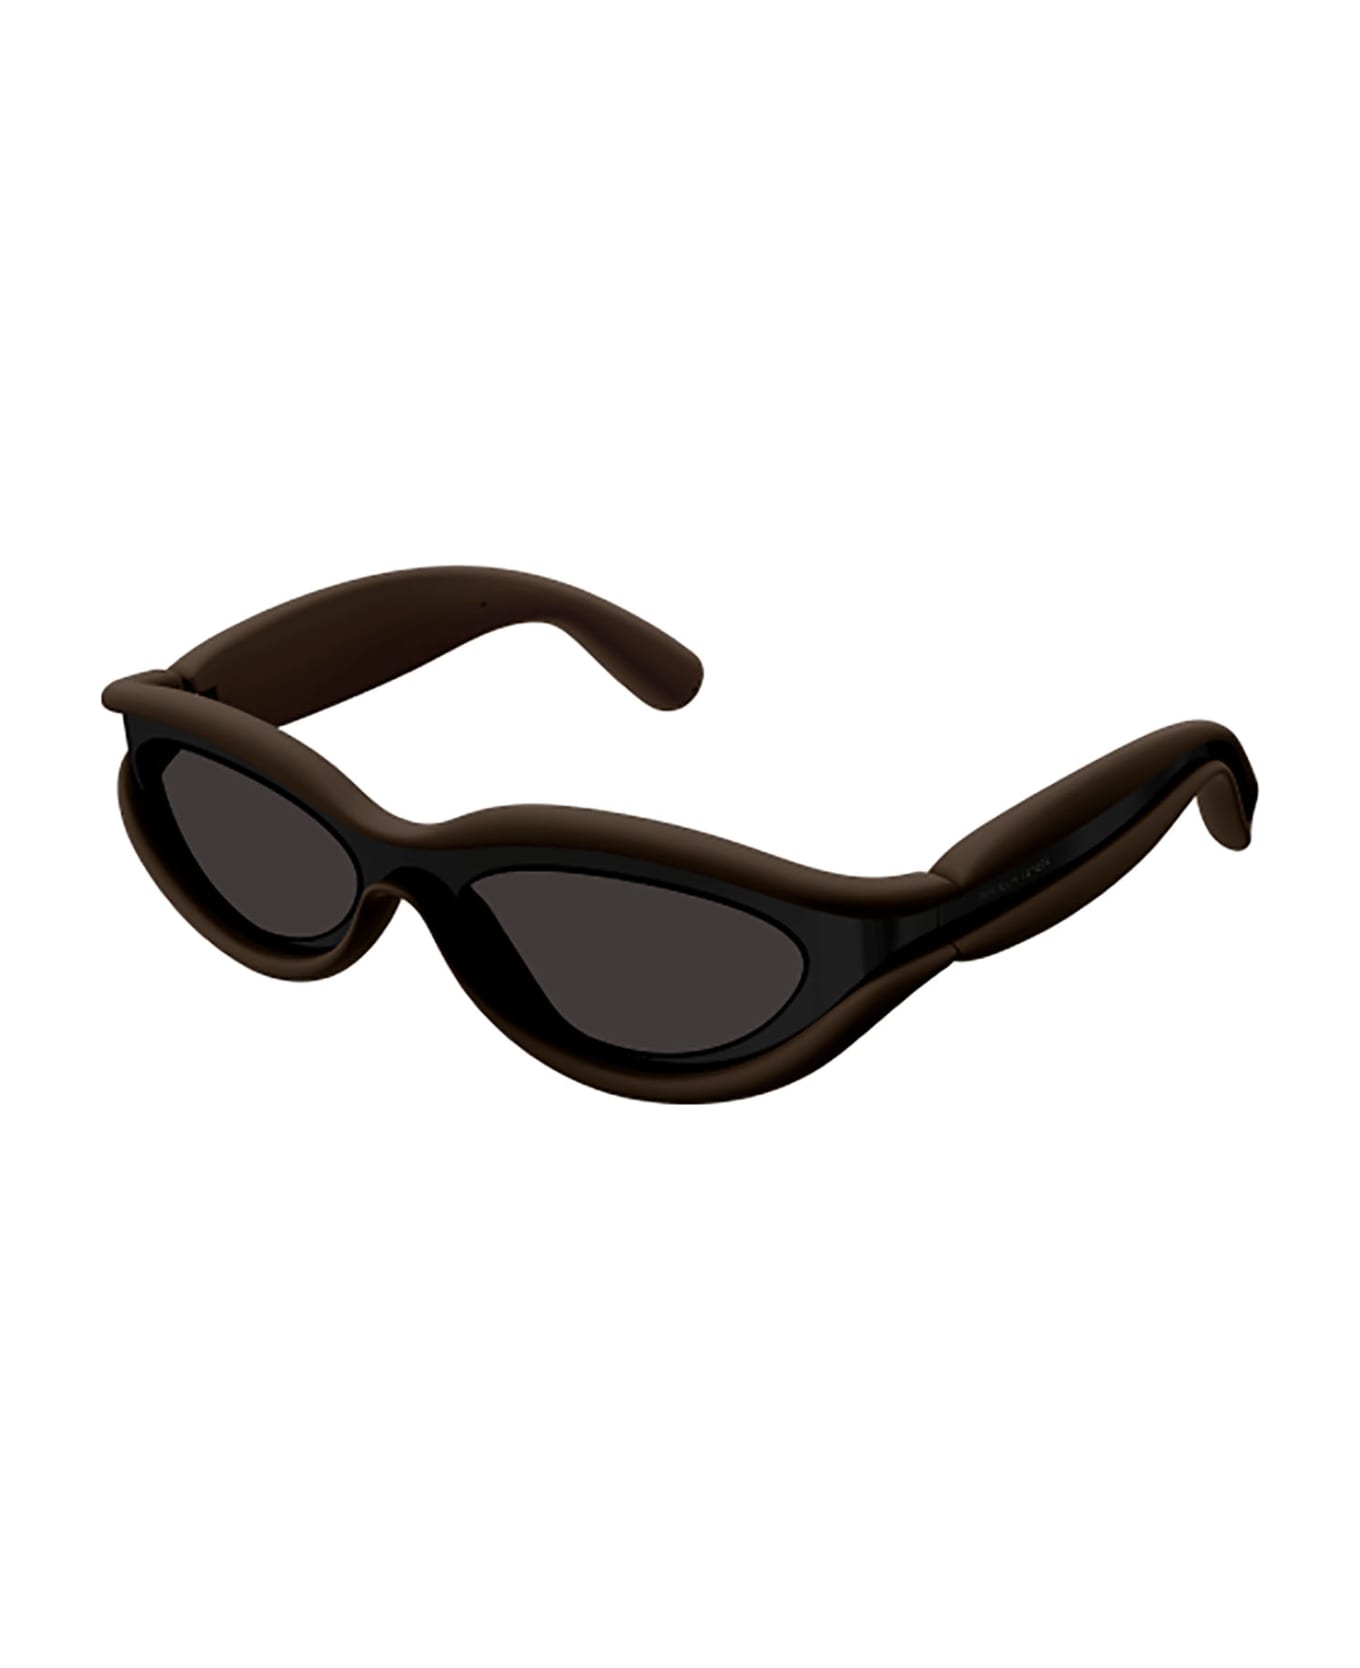 Bottega Veneta Eyewear 1g6m4ni0a - 002 Sunglasses SPLIT TIME OO4129 412914